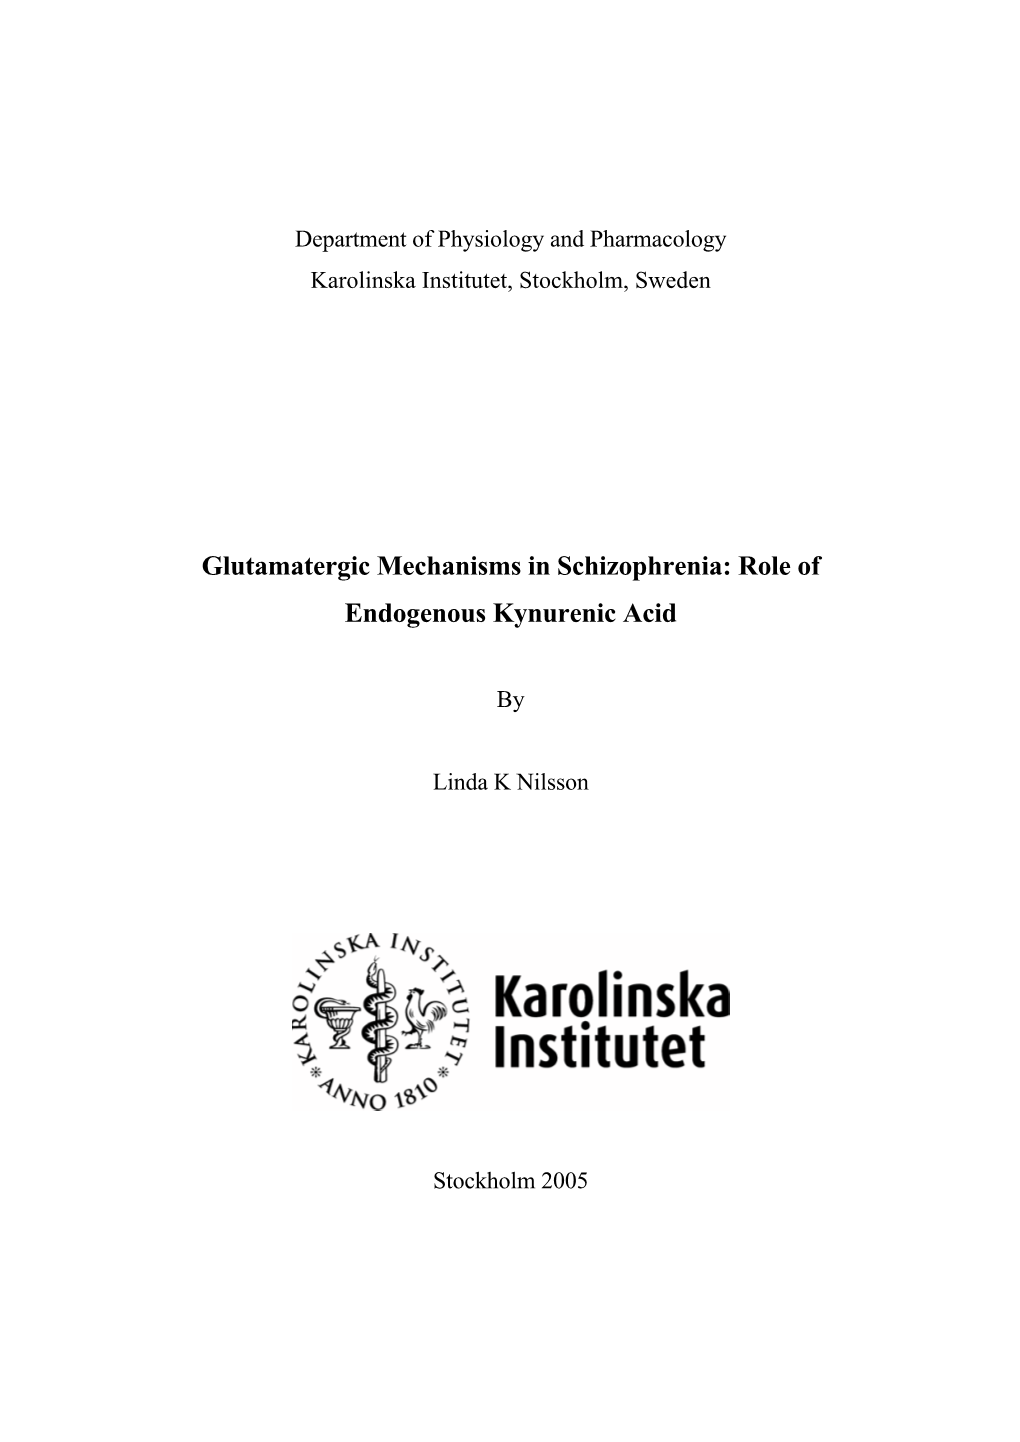 Glutamatergic Mechanisms in Schizophrenia: Role of Endogenous Kynurenic Acid